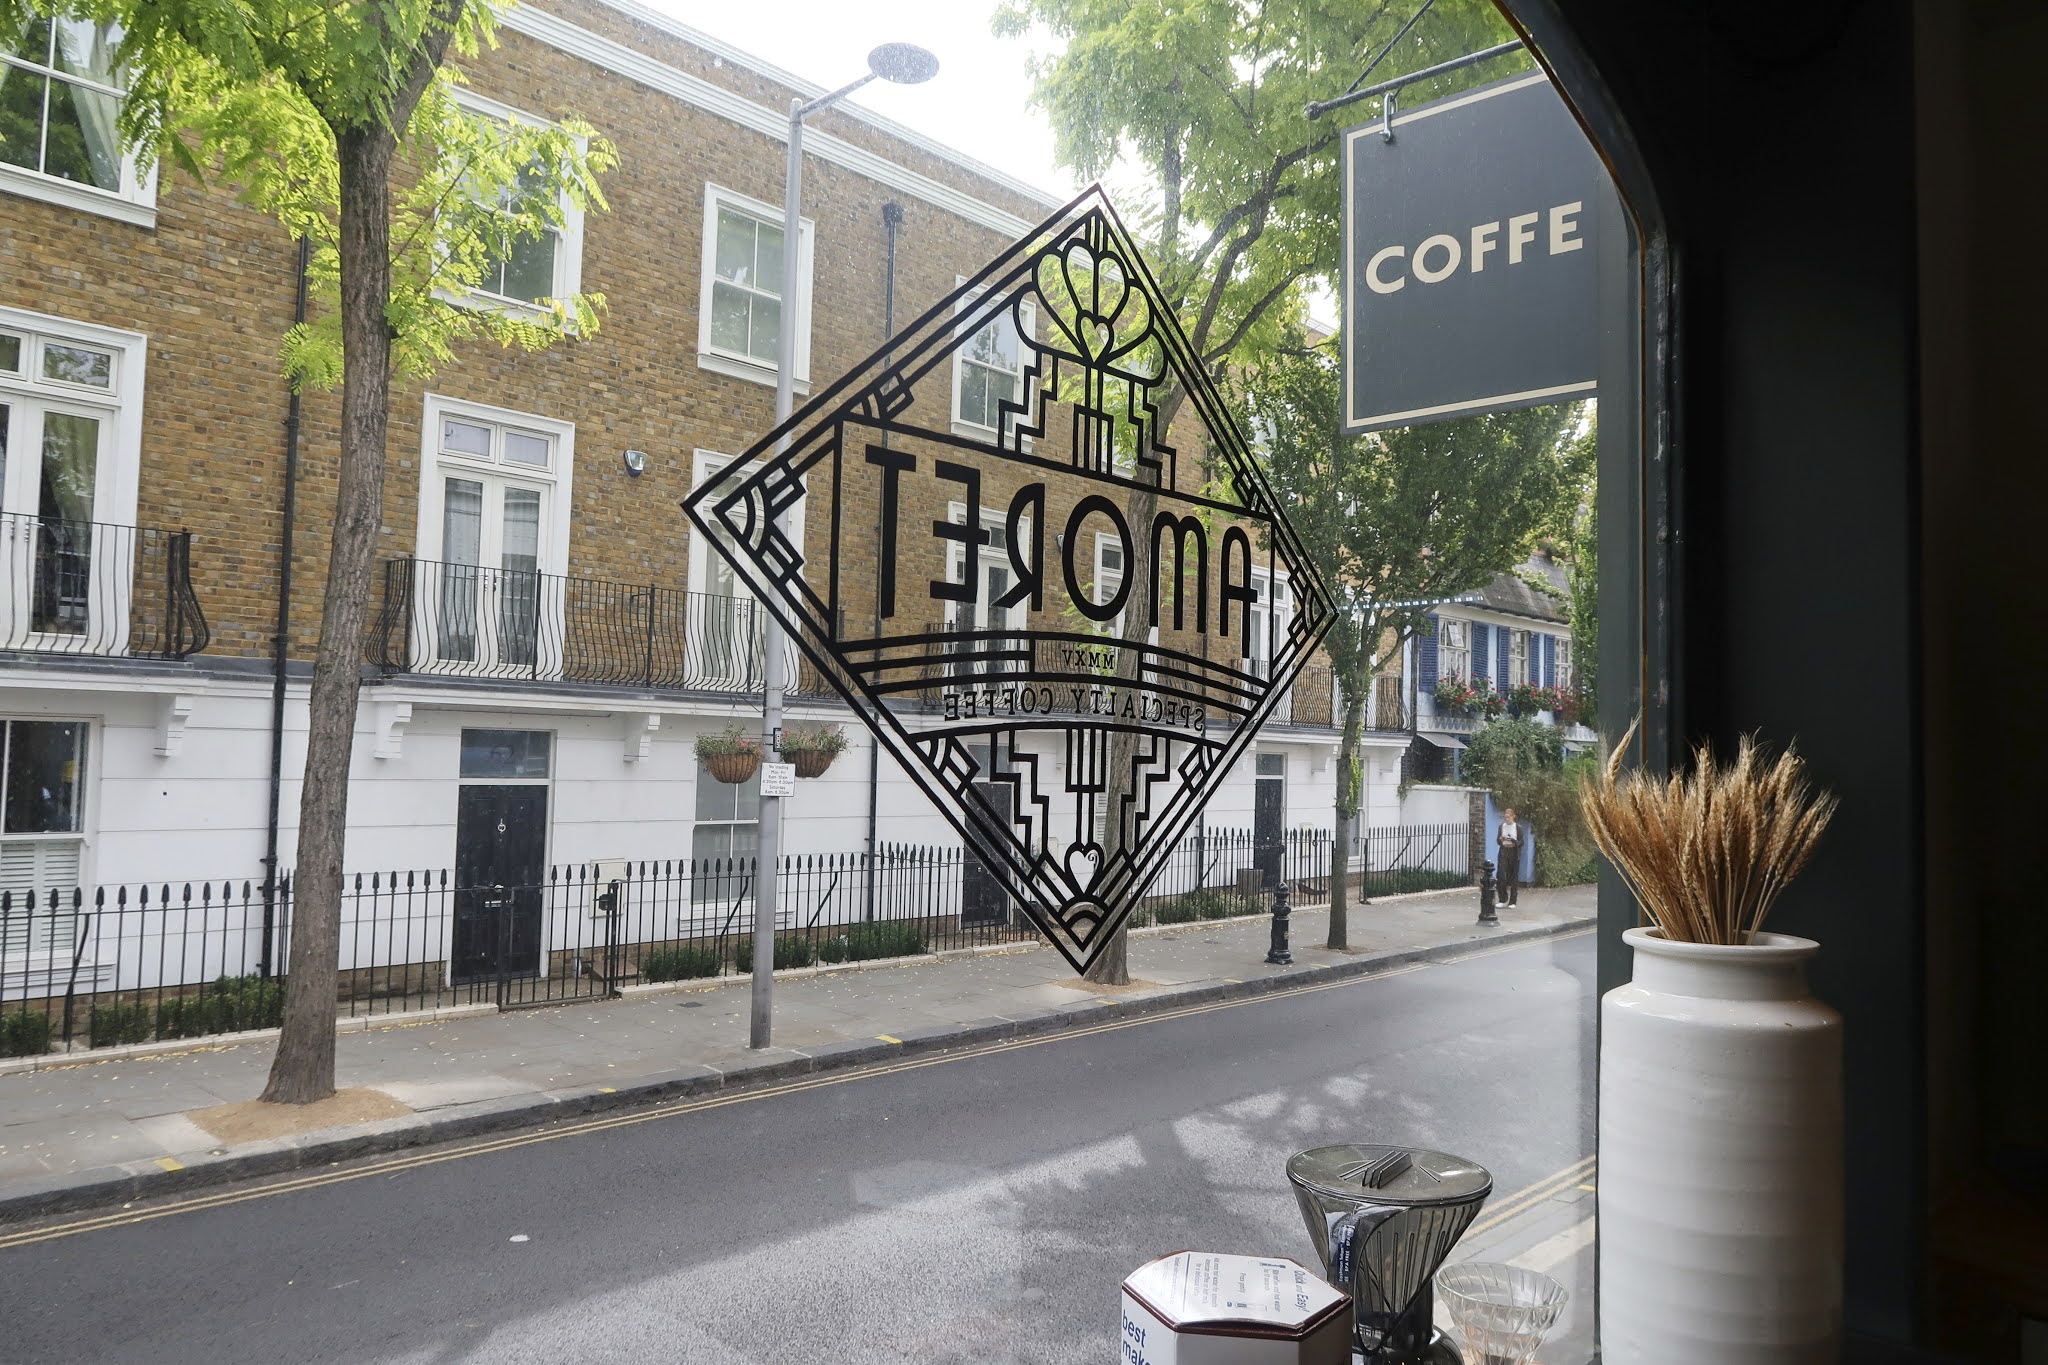 Capuccino - Picture of Amoret Coffee, London - Tripadvisor